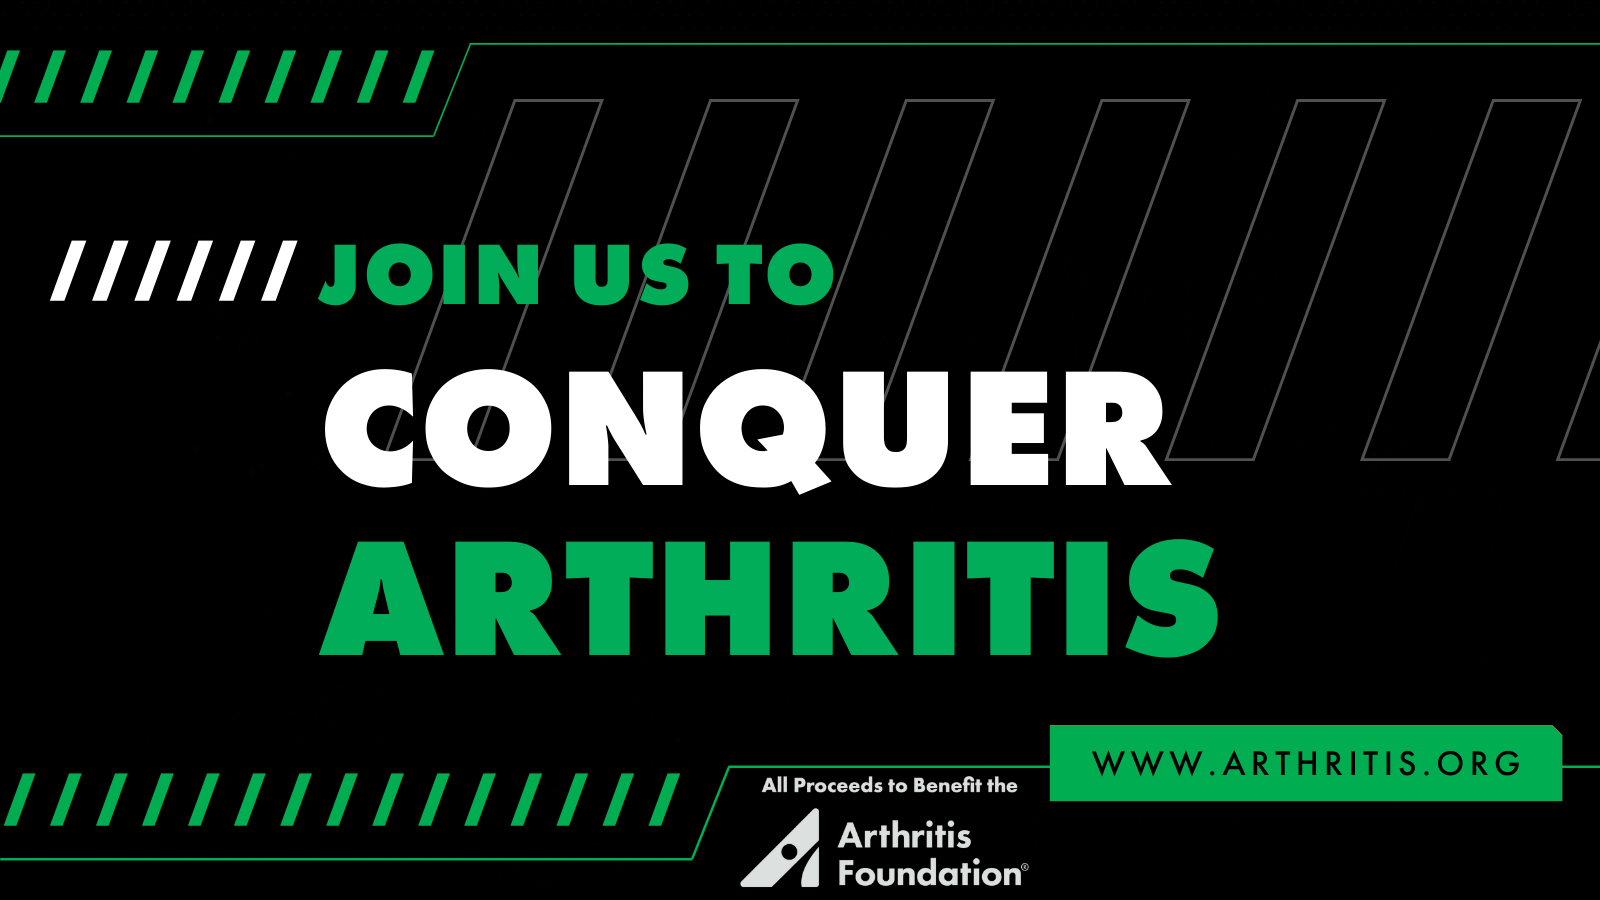 https://www.arthritis.org/getmedia/67714257-f40c-4c75-99e1-d182a68daad3/Join-Us-to-Conquer-Arthritis.png